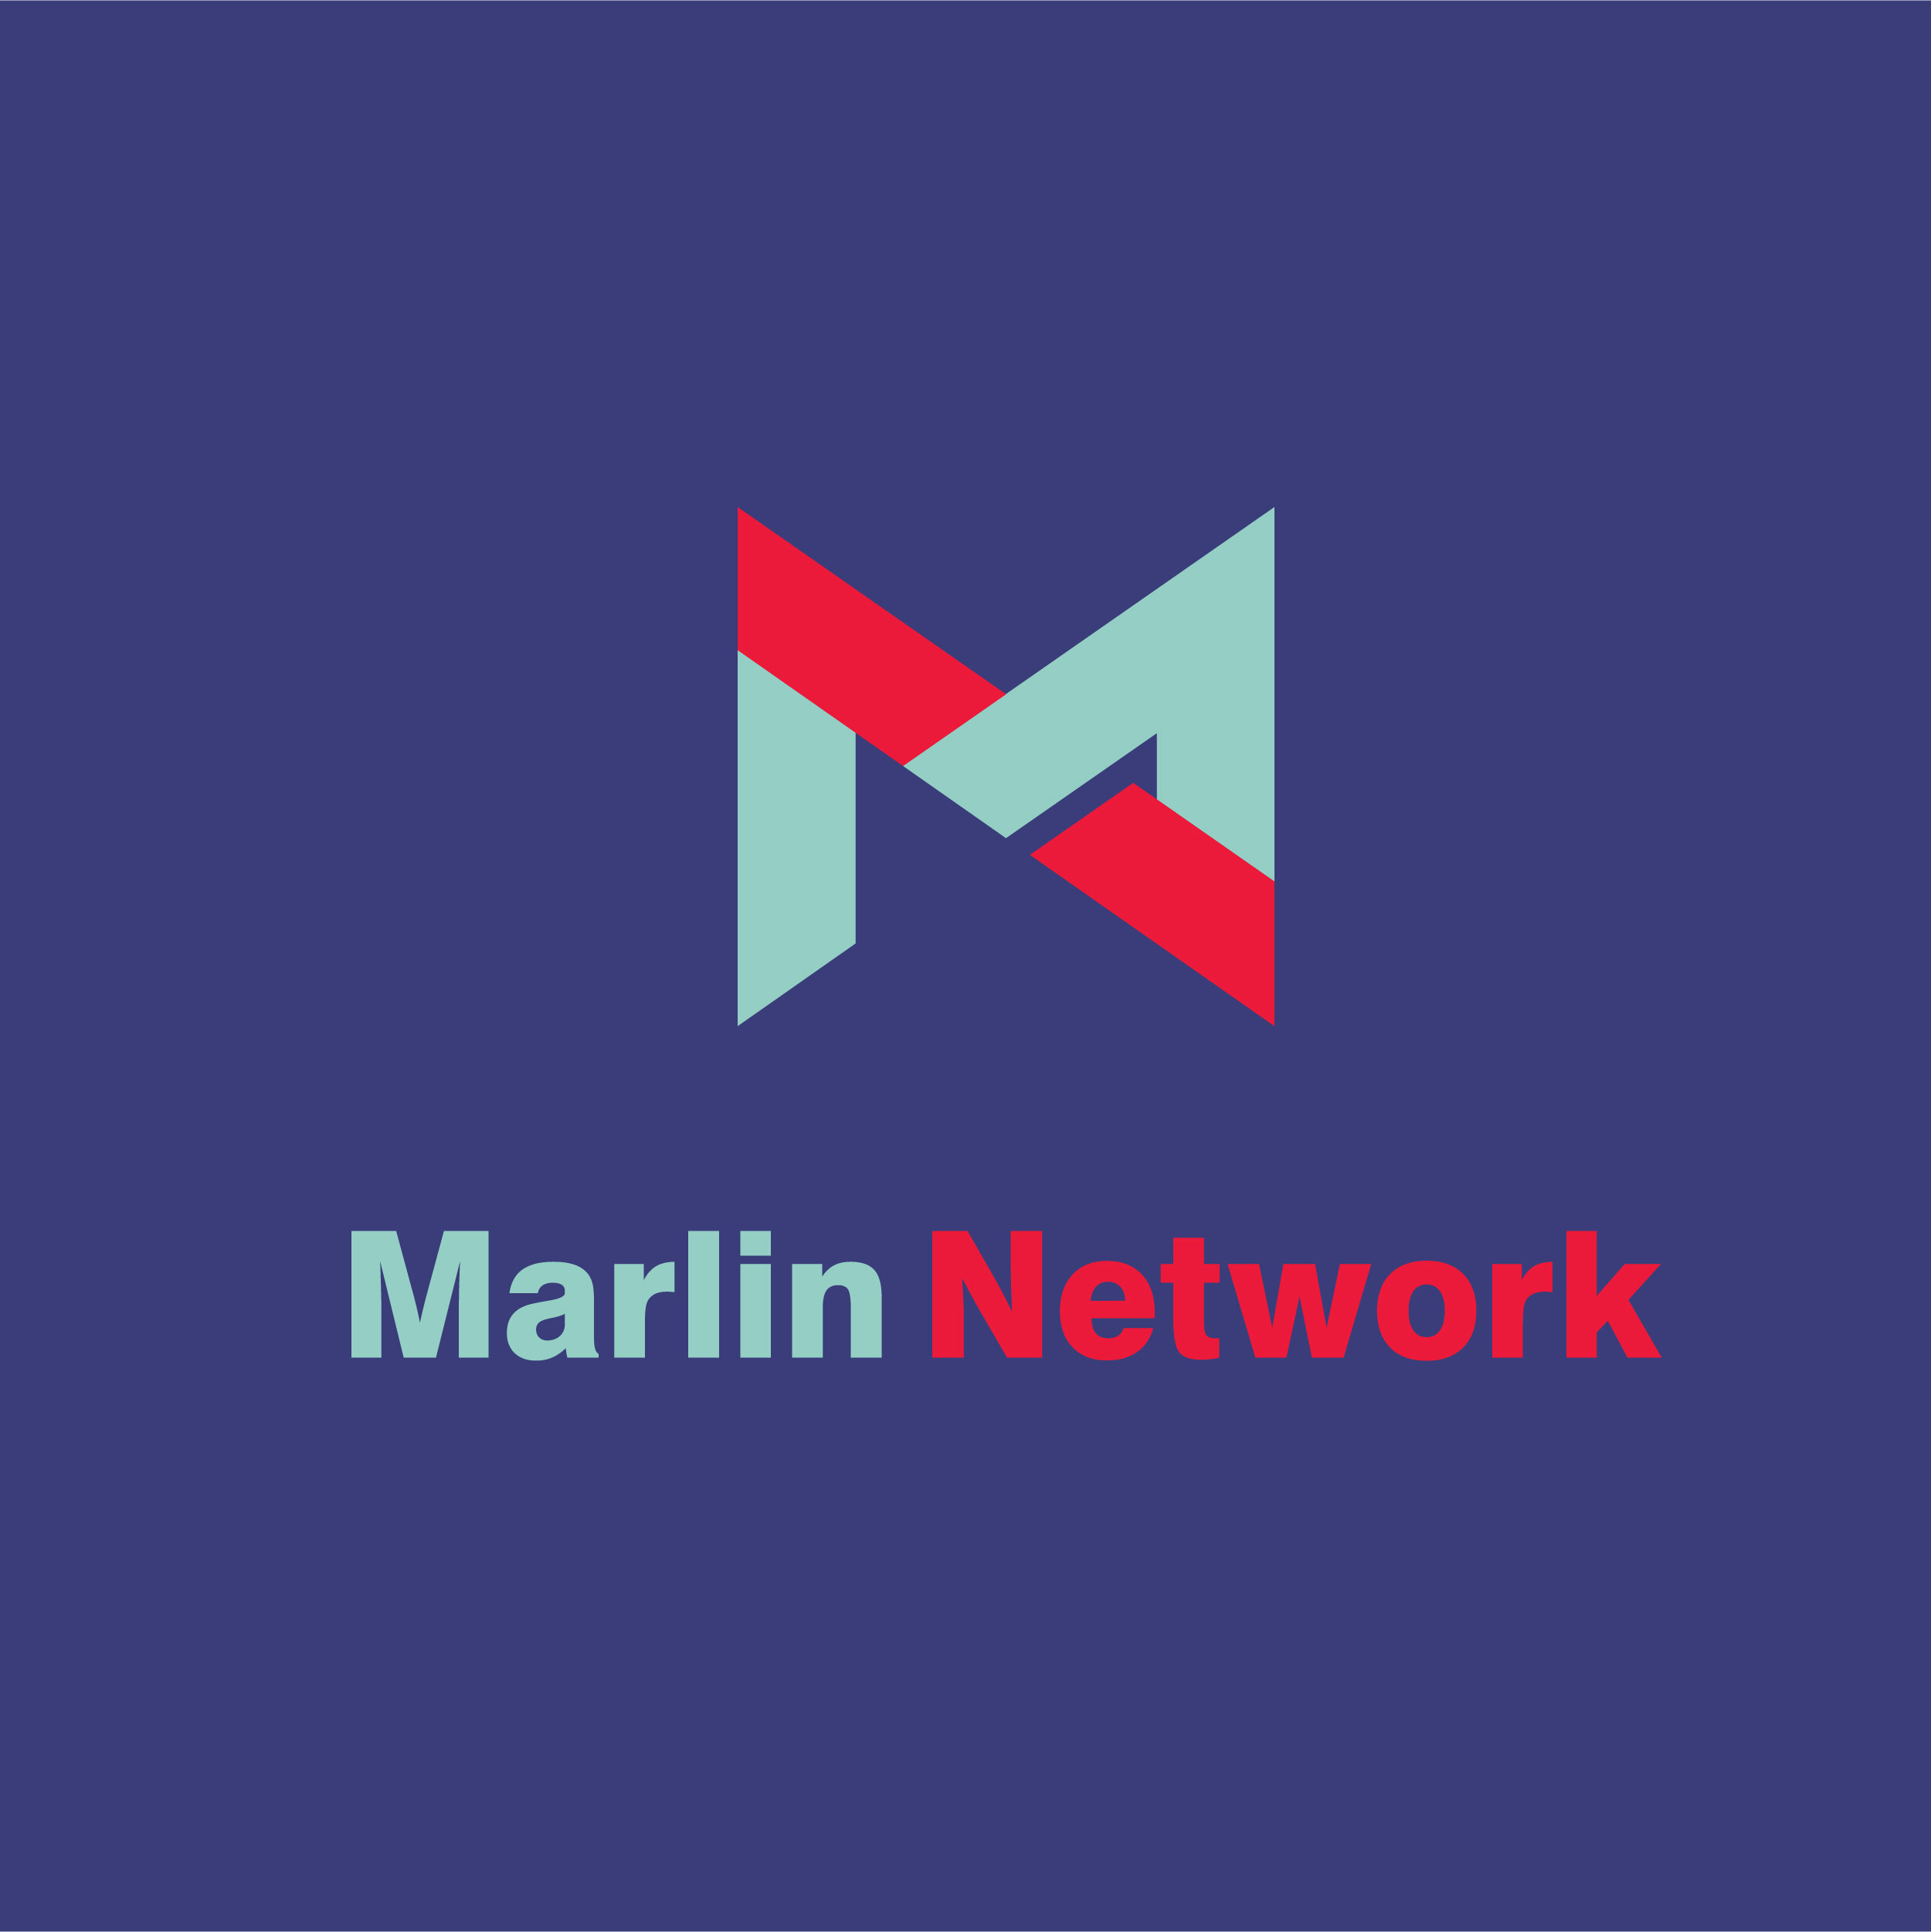 MarlinNetwork-Branding_Primary.jpg